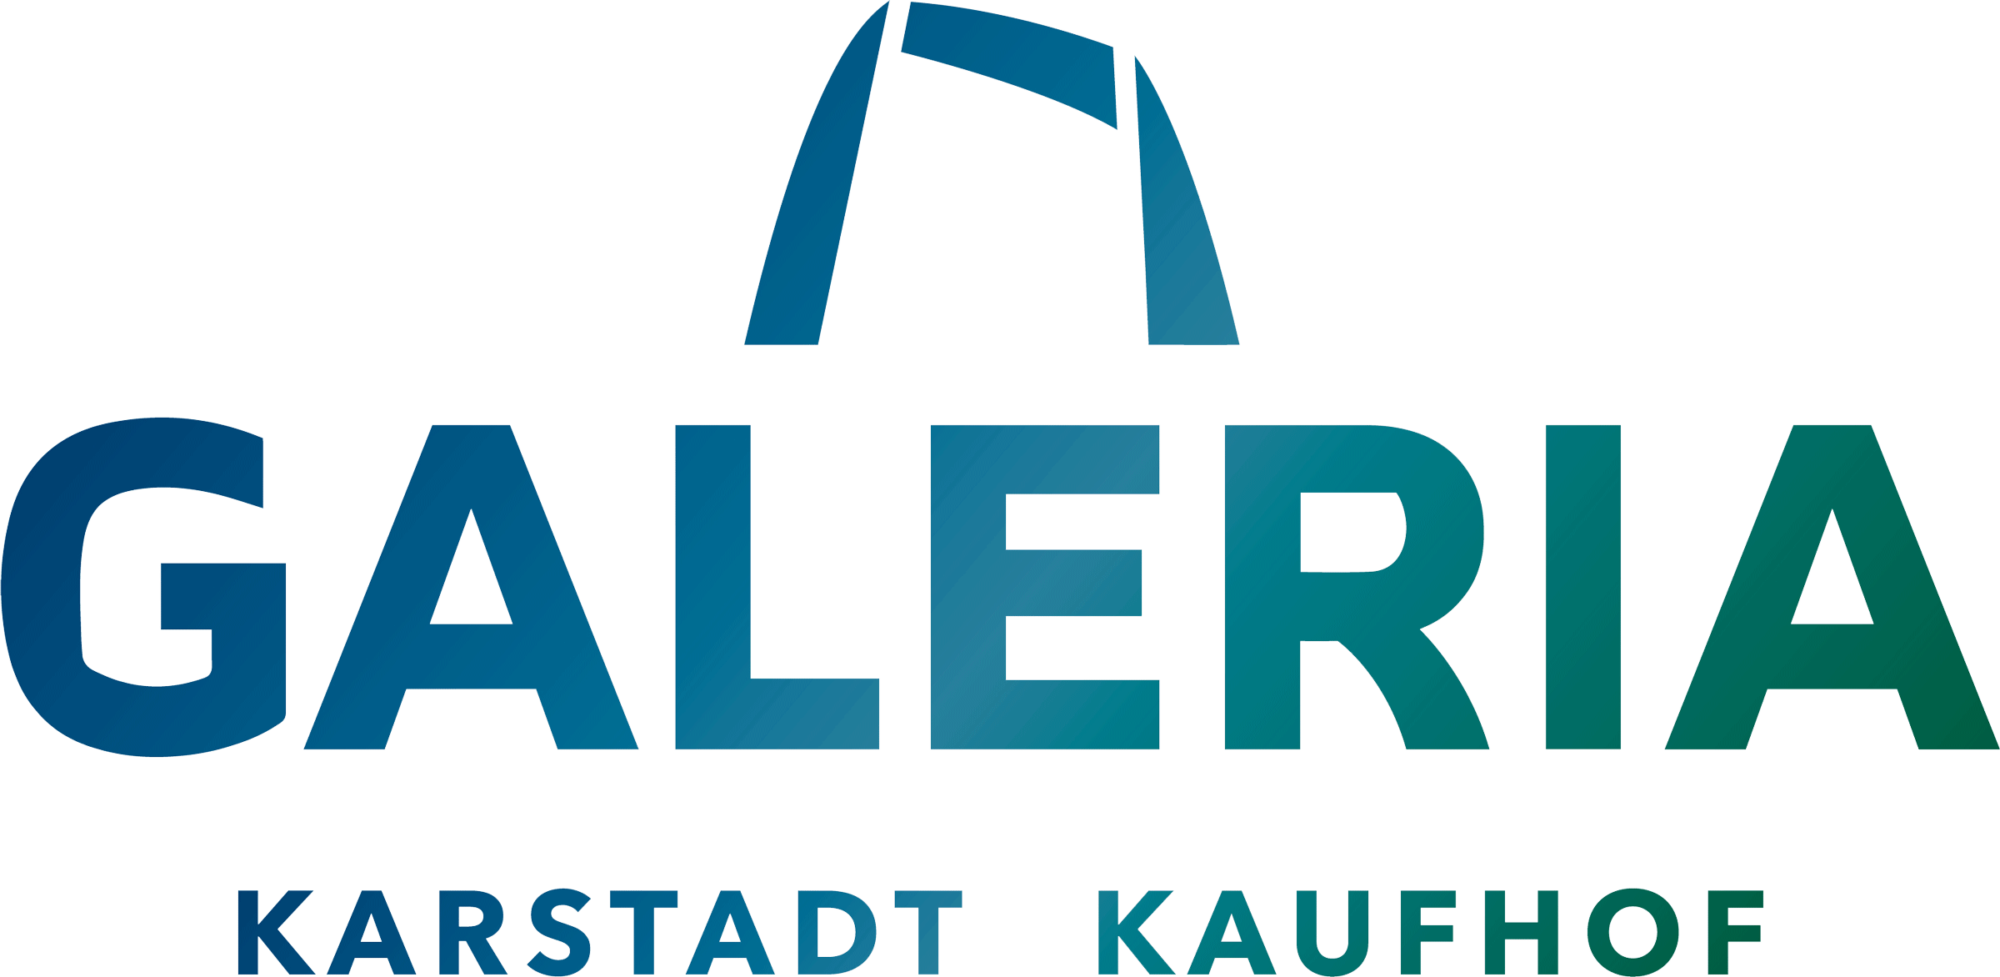 Galeria Karstadt Kaufhof GmbH Galeria Karstadt Kaufhof GmbH